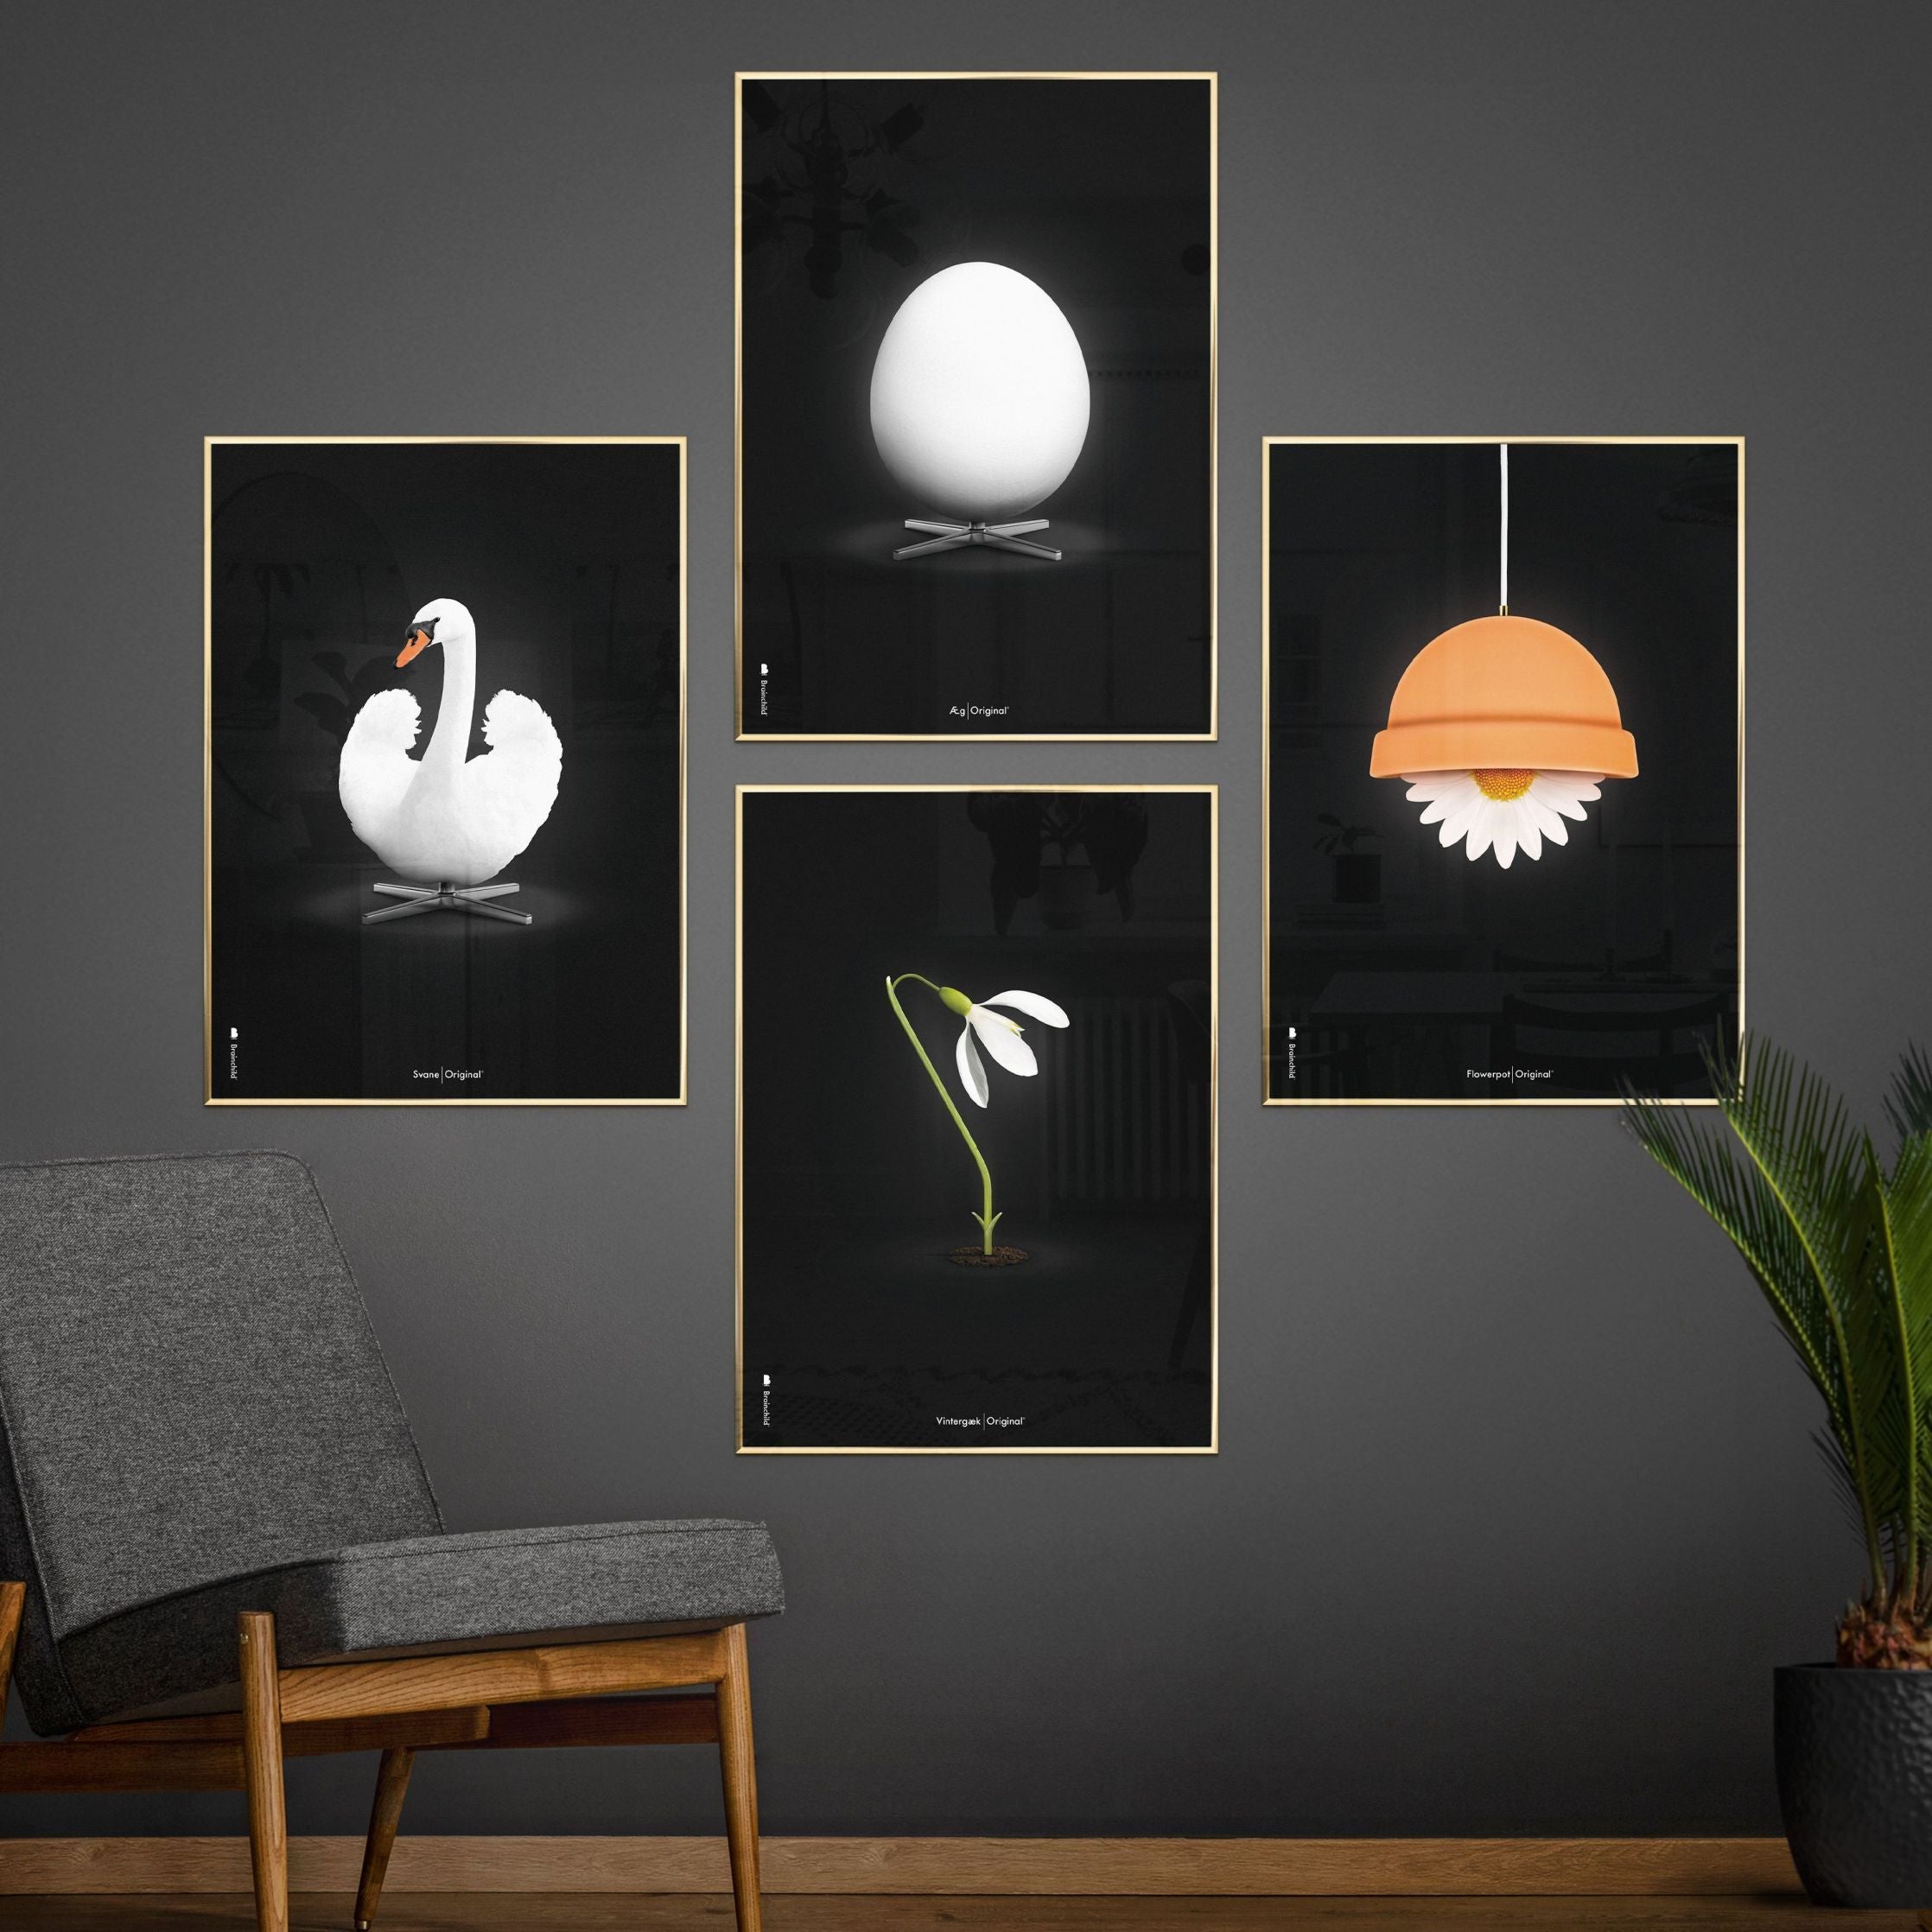 Brainchild Flowerpot Classic Poster, Frame in Black Lacquered Wood 50x70 cm, sort baggrund